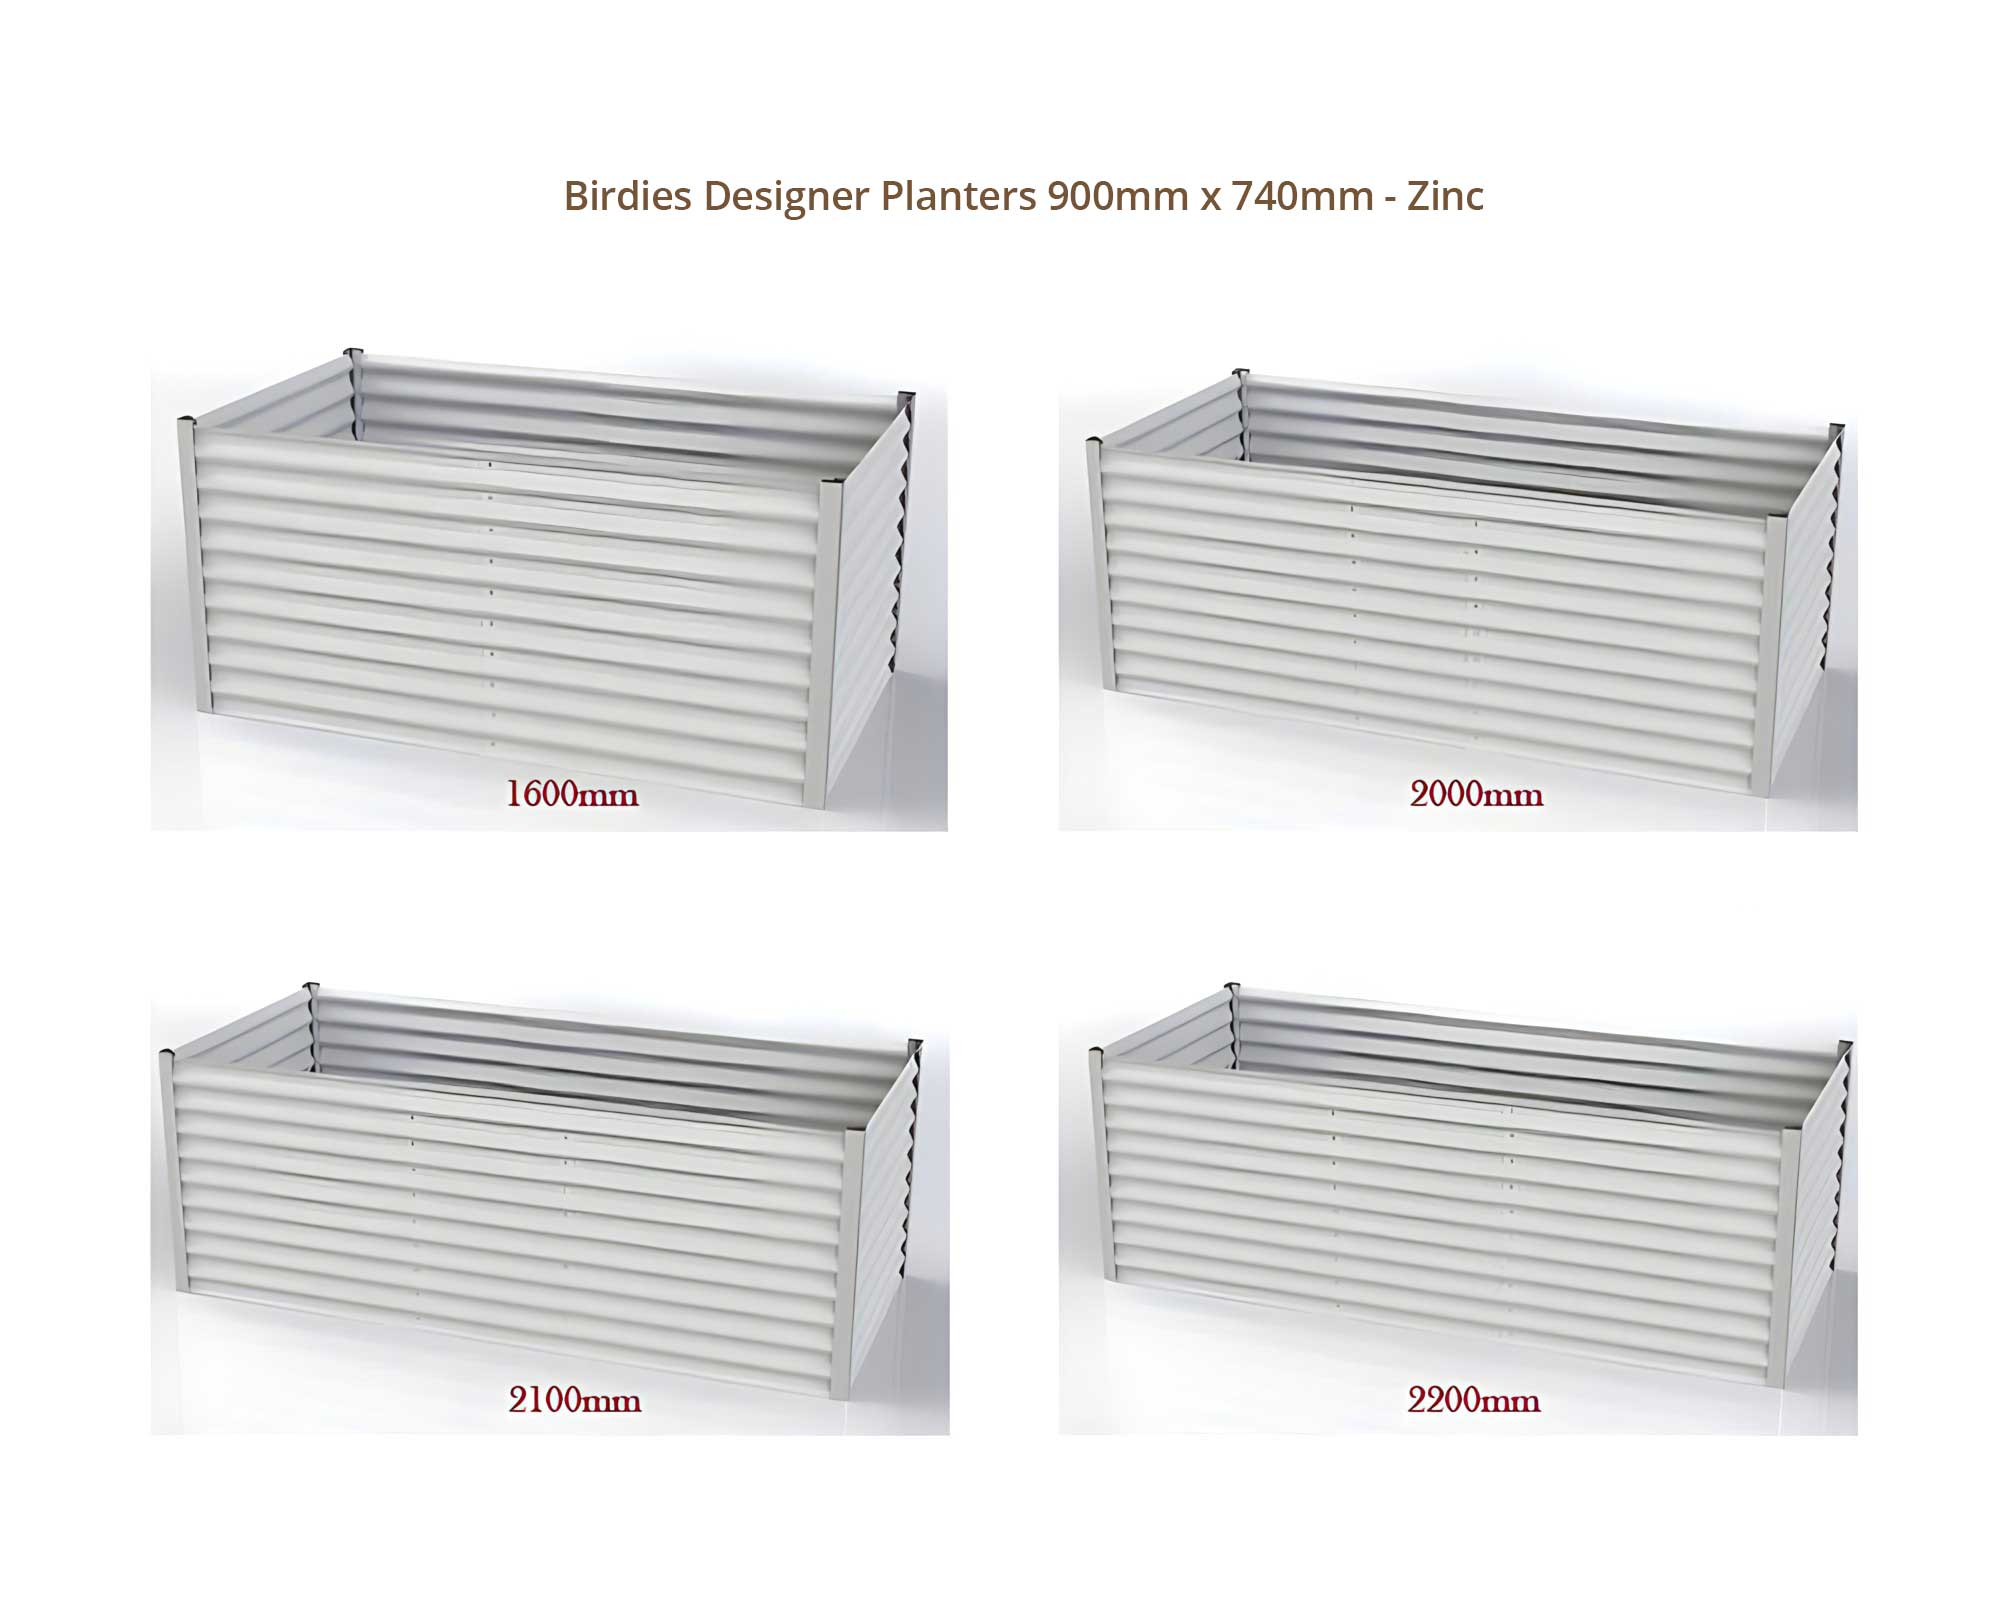 Birdies Designer Planters - 900mm Wide x 740mm High - Zinc